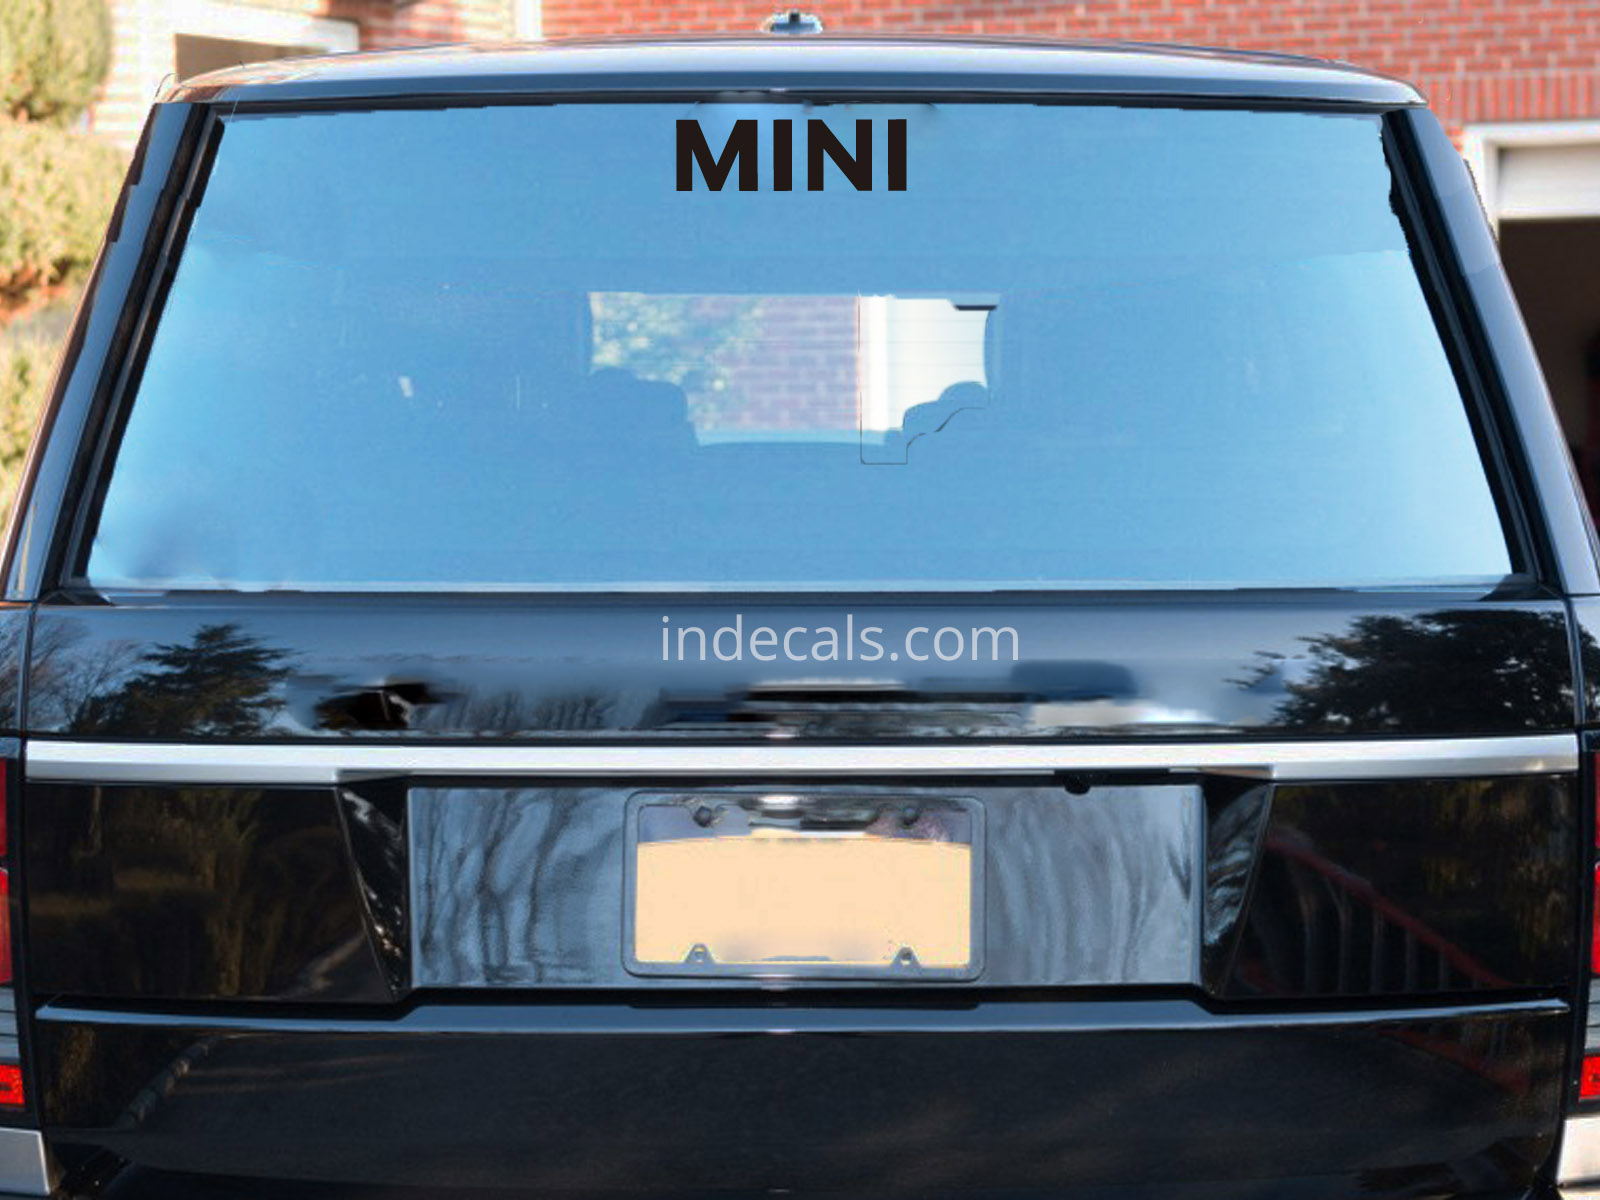 1 x Mini Sticker for Windshield or Back Window - Black